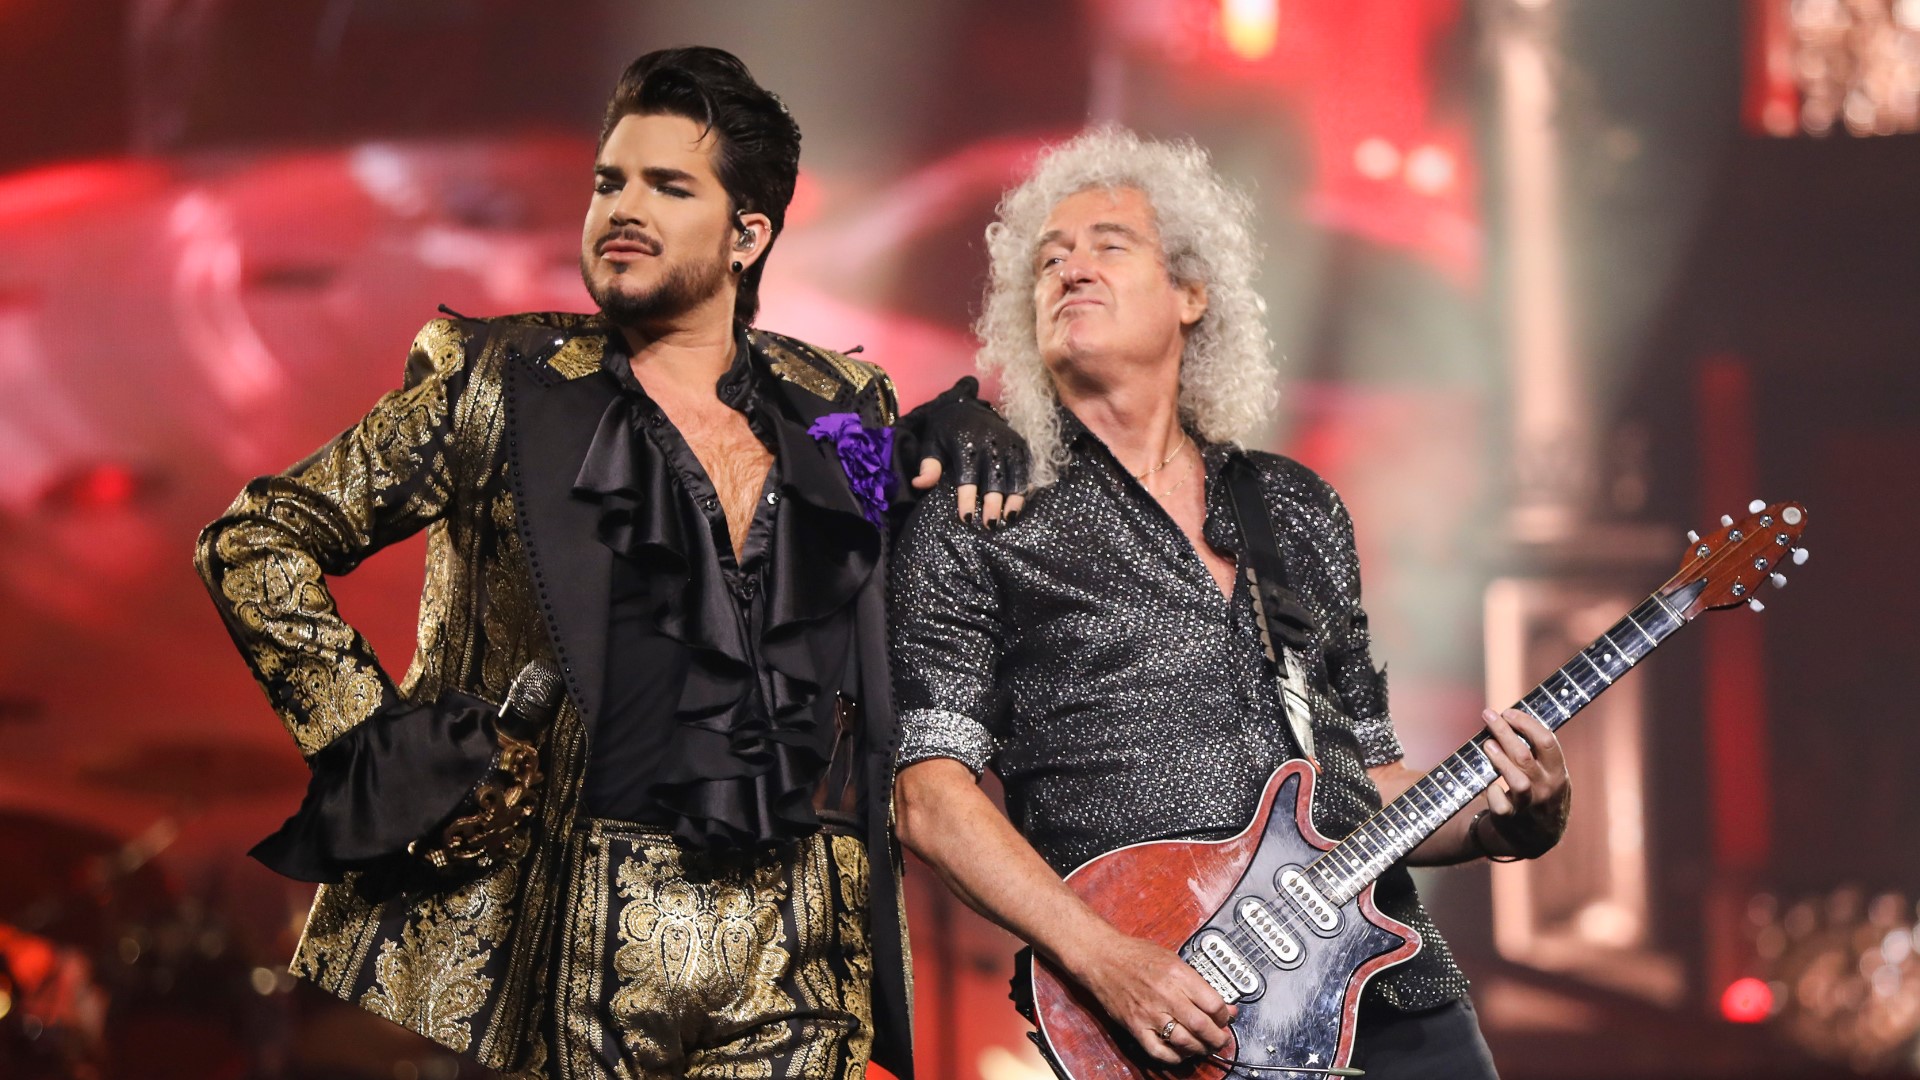 Queen + Adam Lambert: A collaboration between the members of the British band Queen and vocalist Adam Lambert.